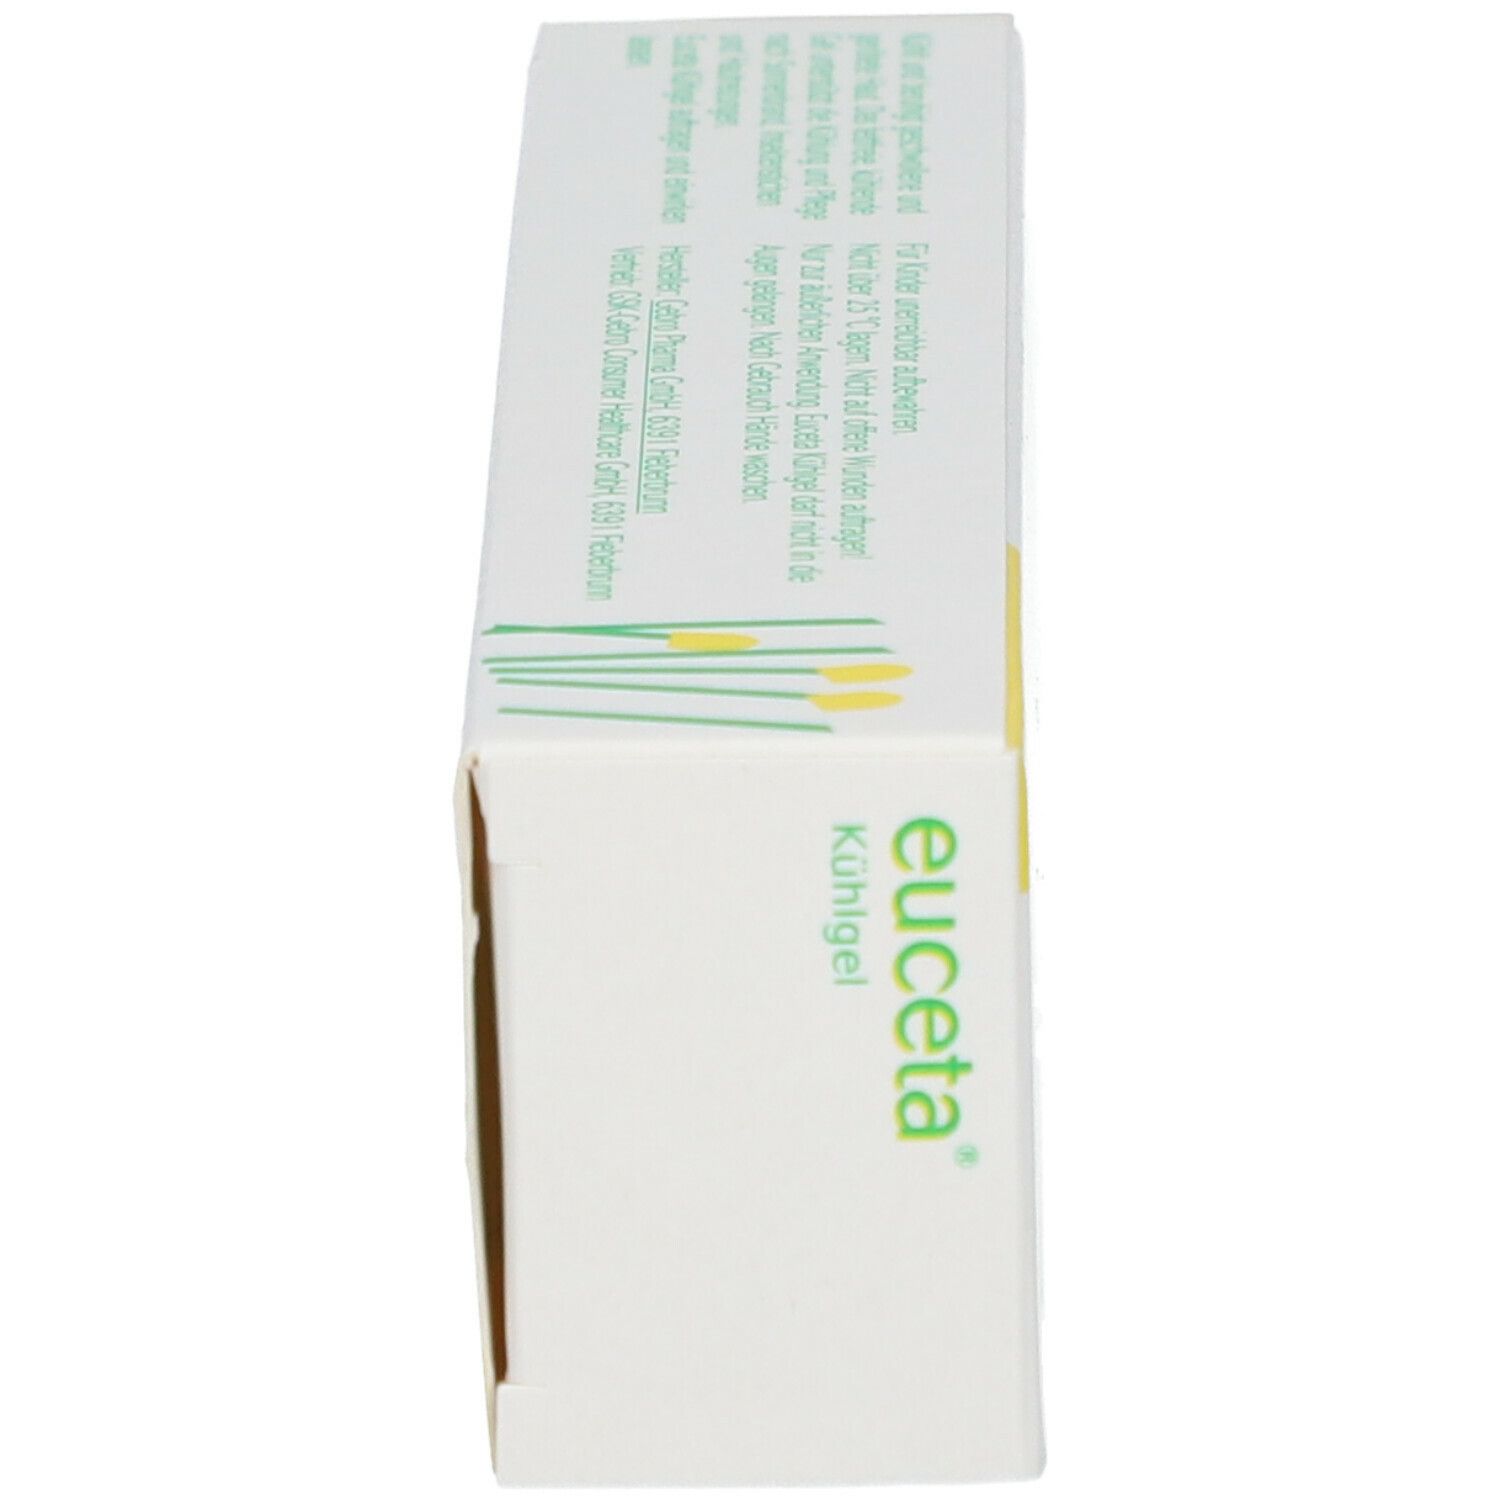 euceta®-Kühlgel 50 g 